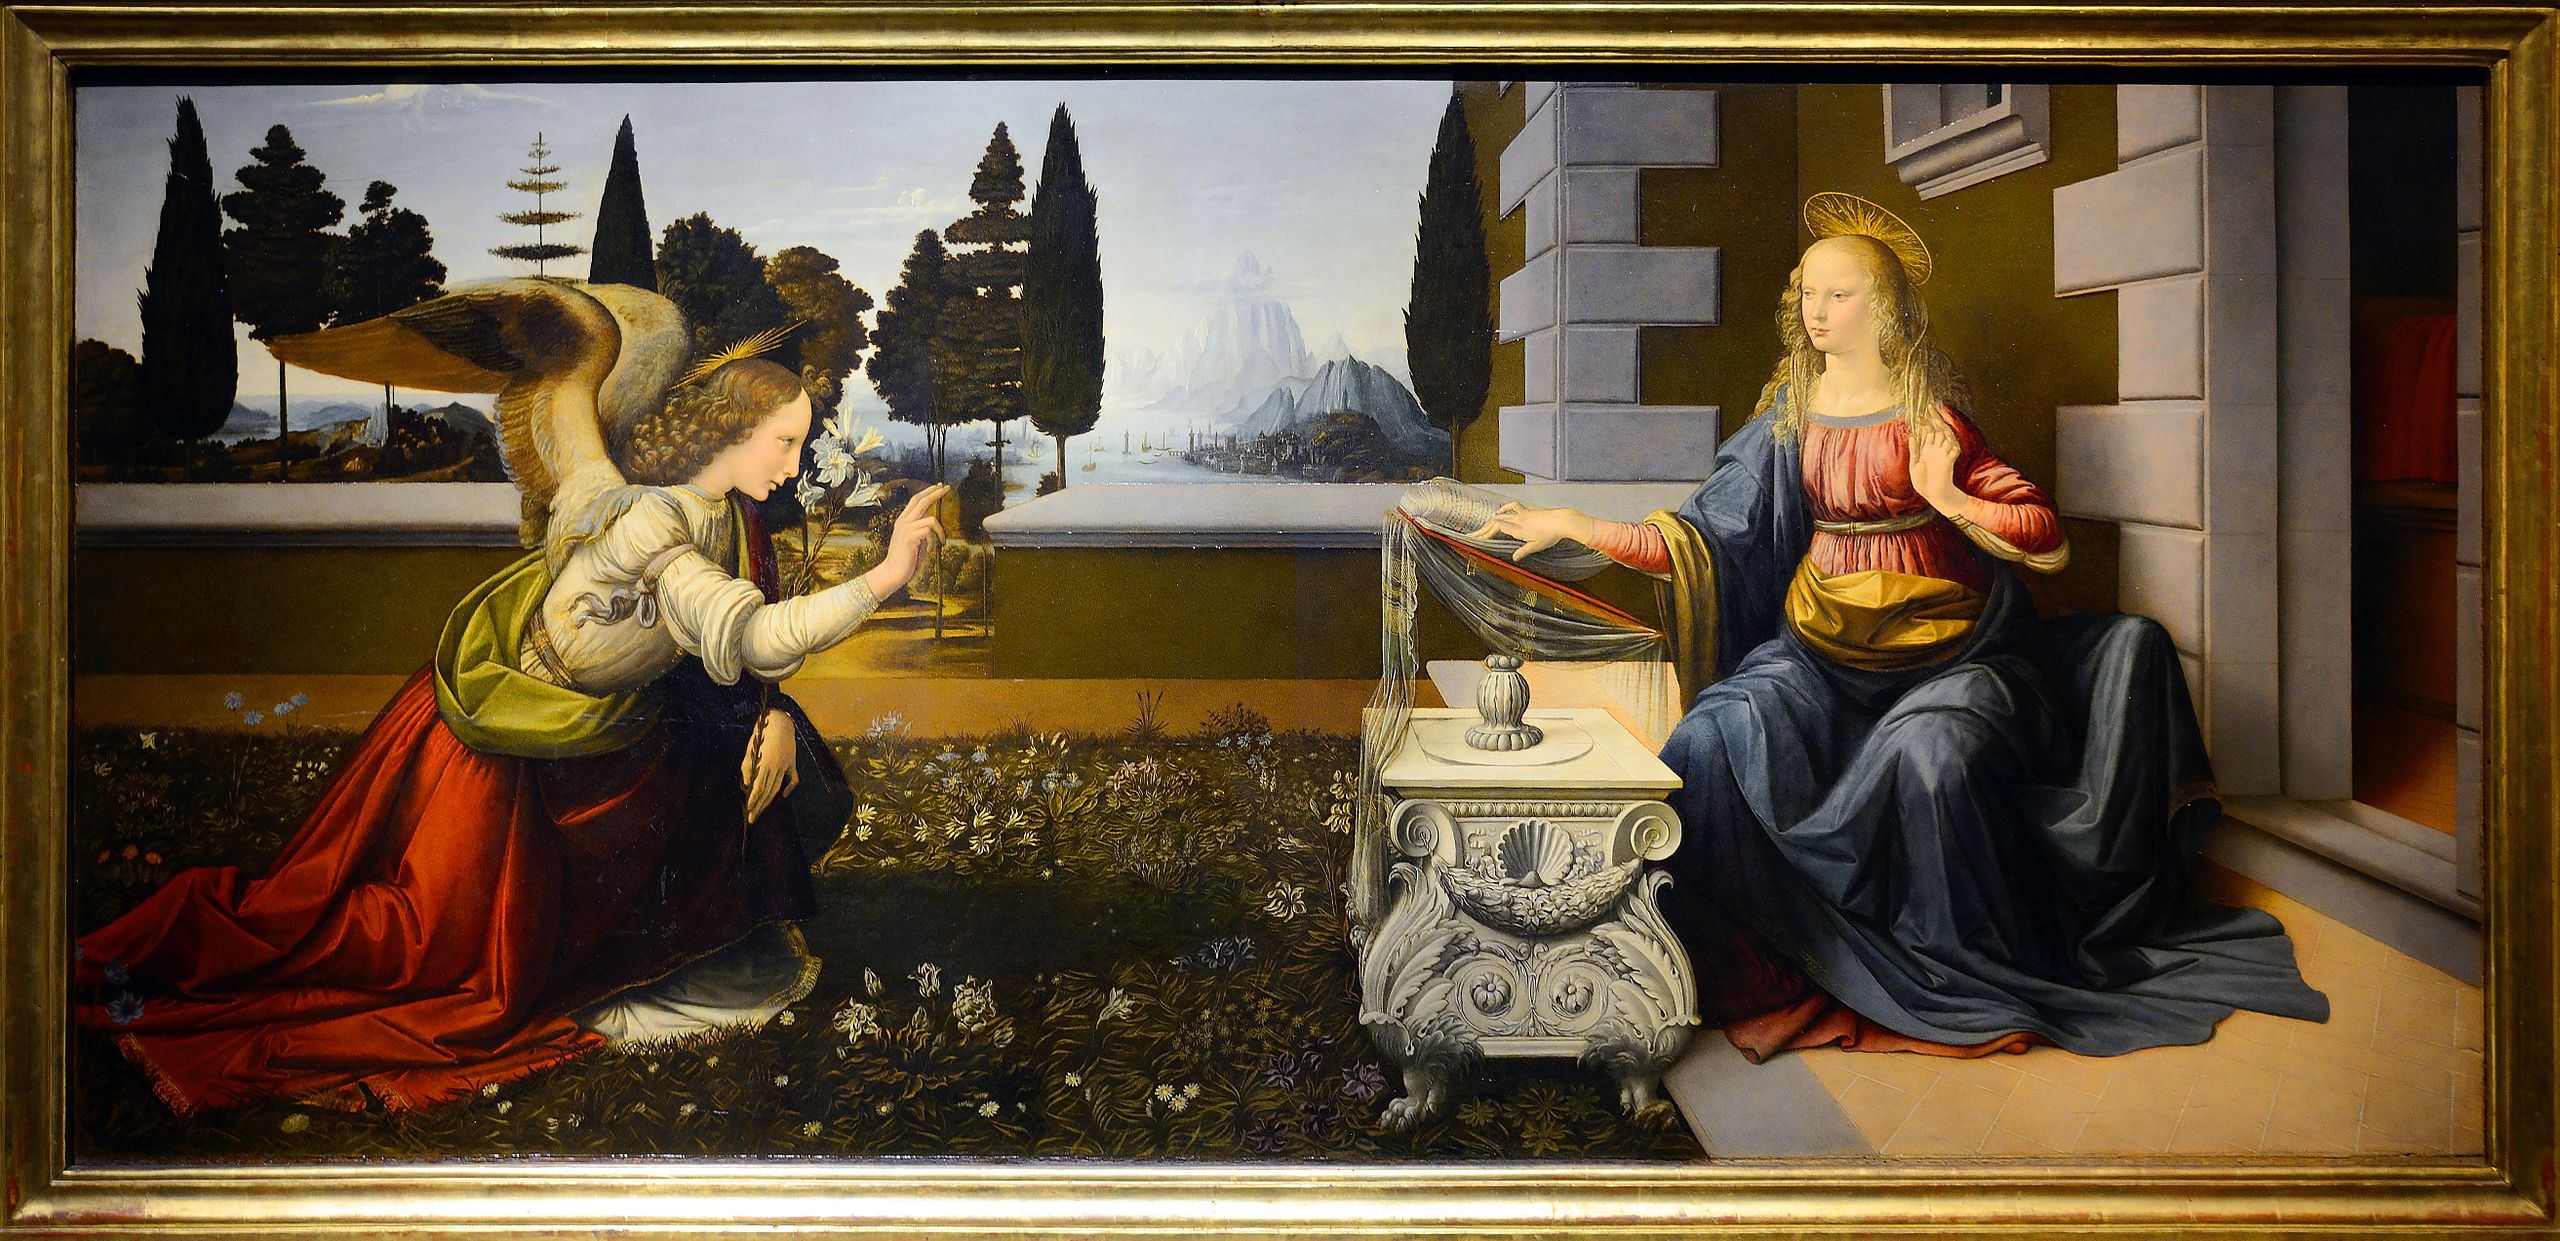 the birth of christ by leonardo da vinci